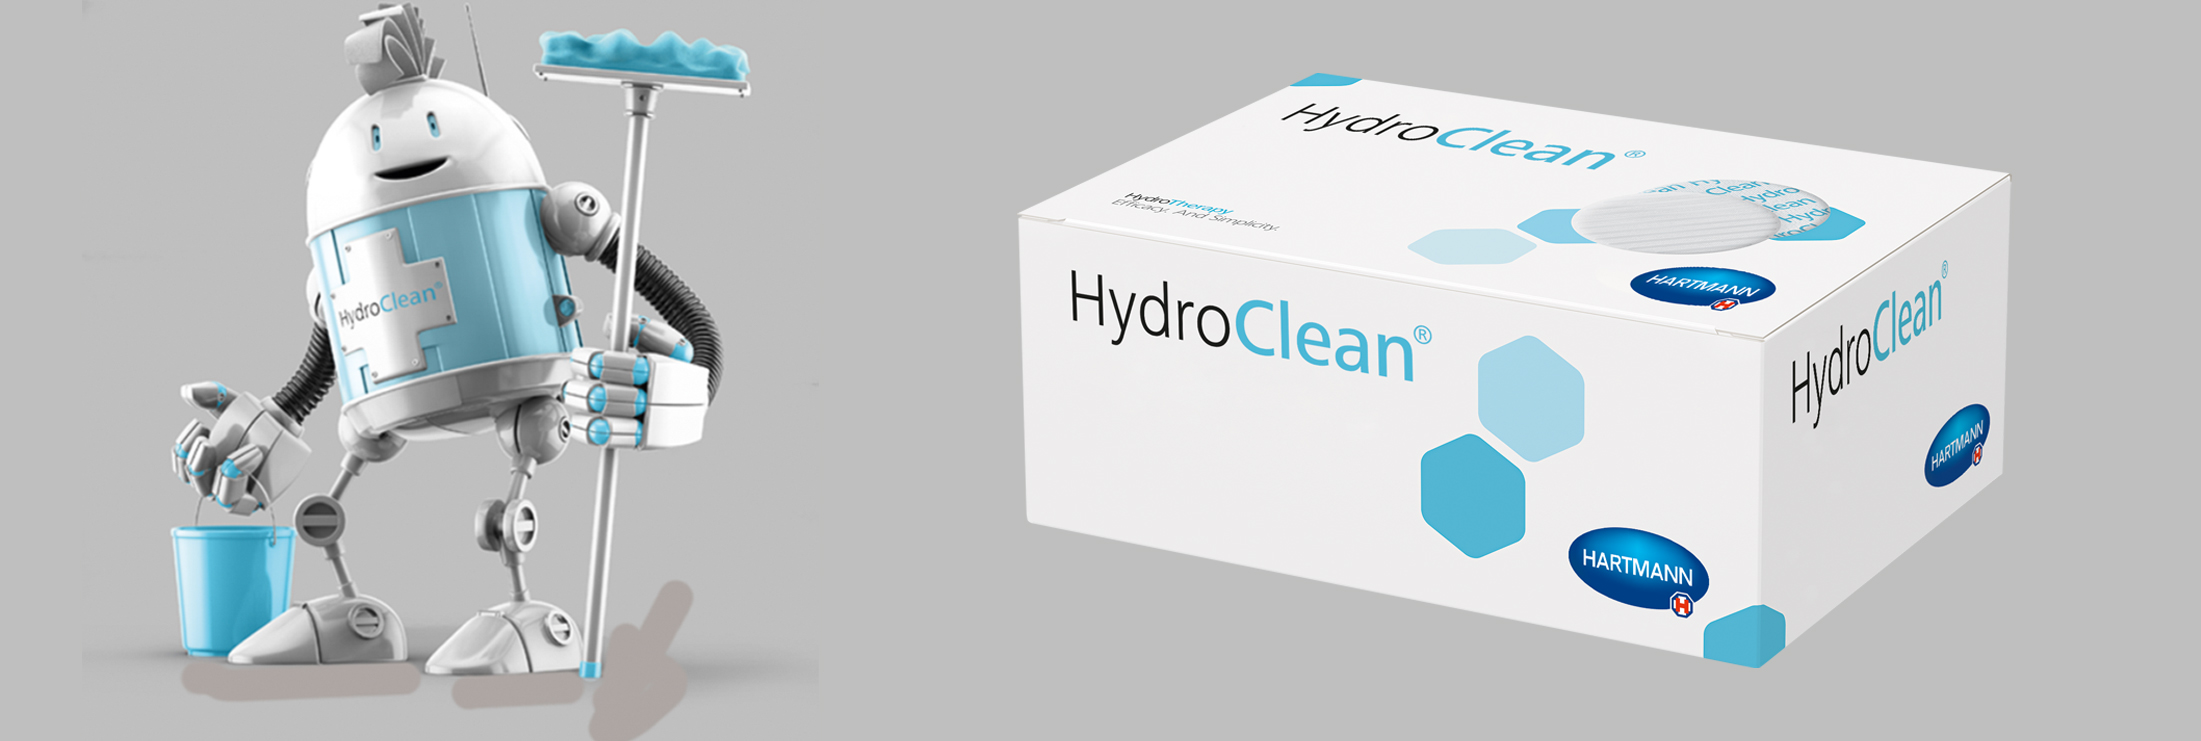 HydroClean Headerbild.jpg